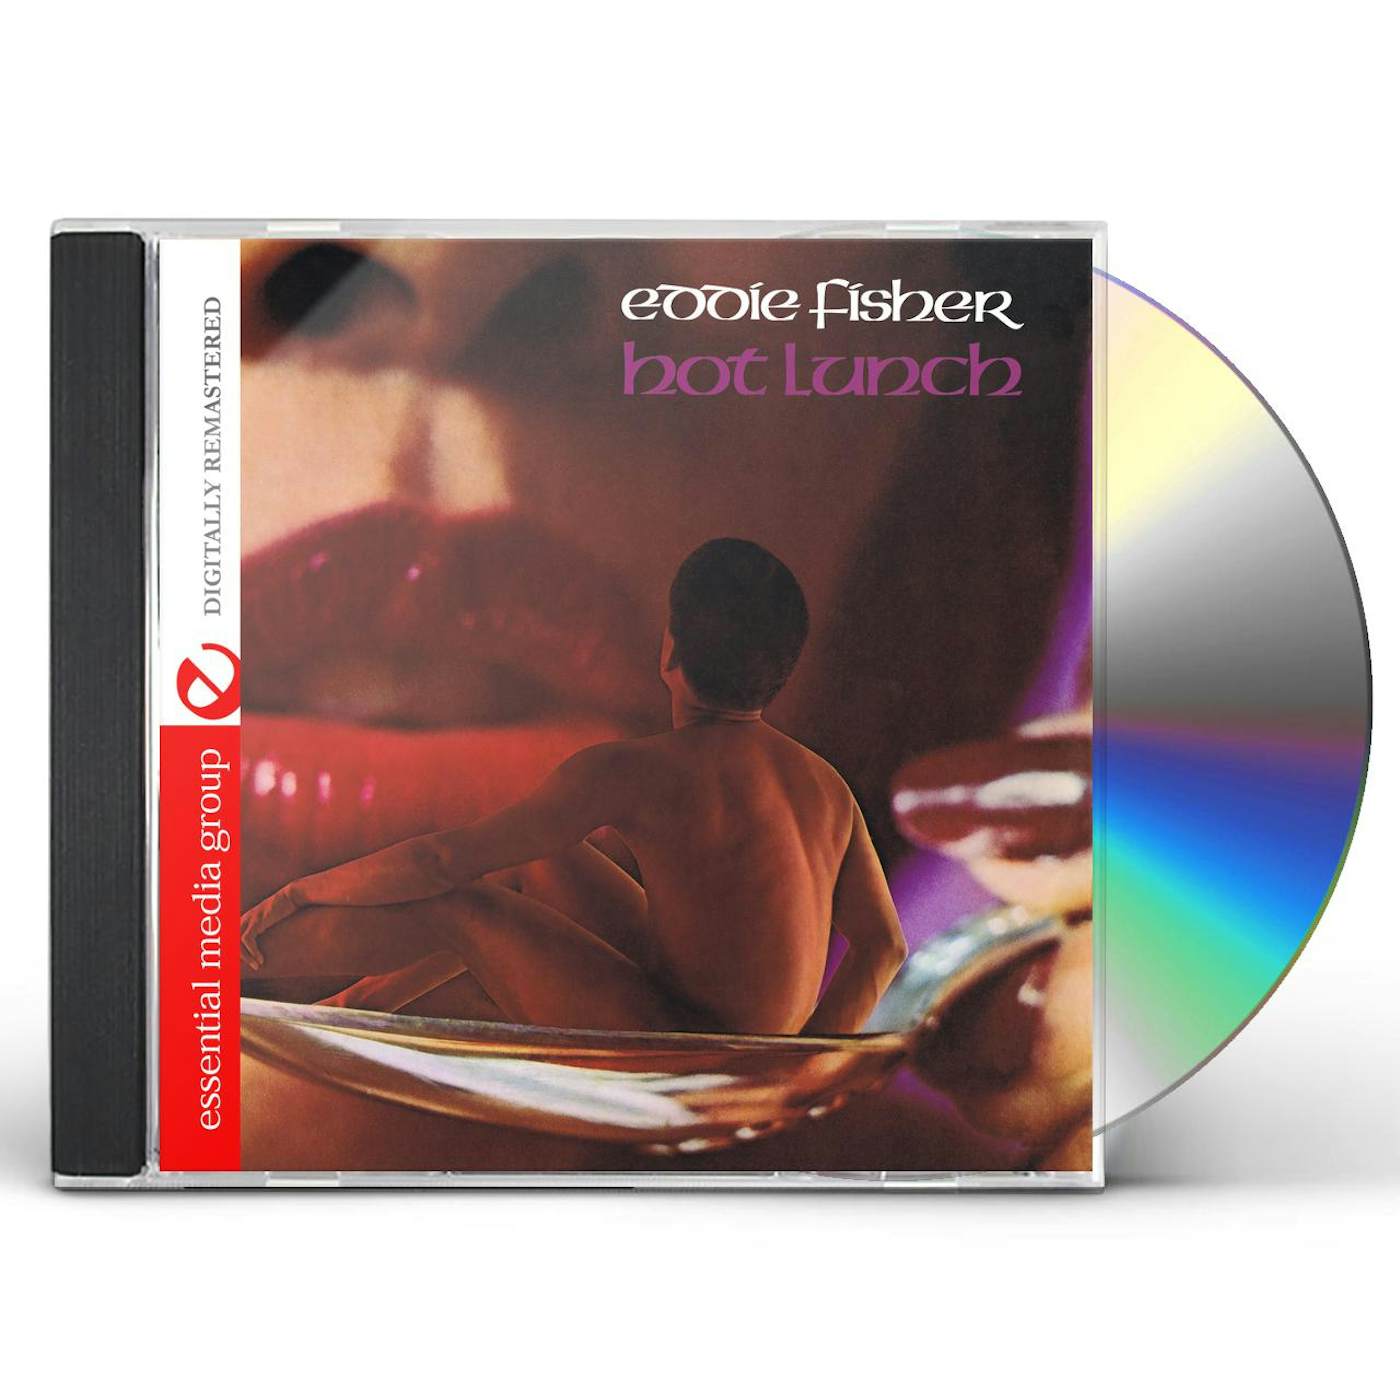 Eddie Fisher HOT LUNCH CD